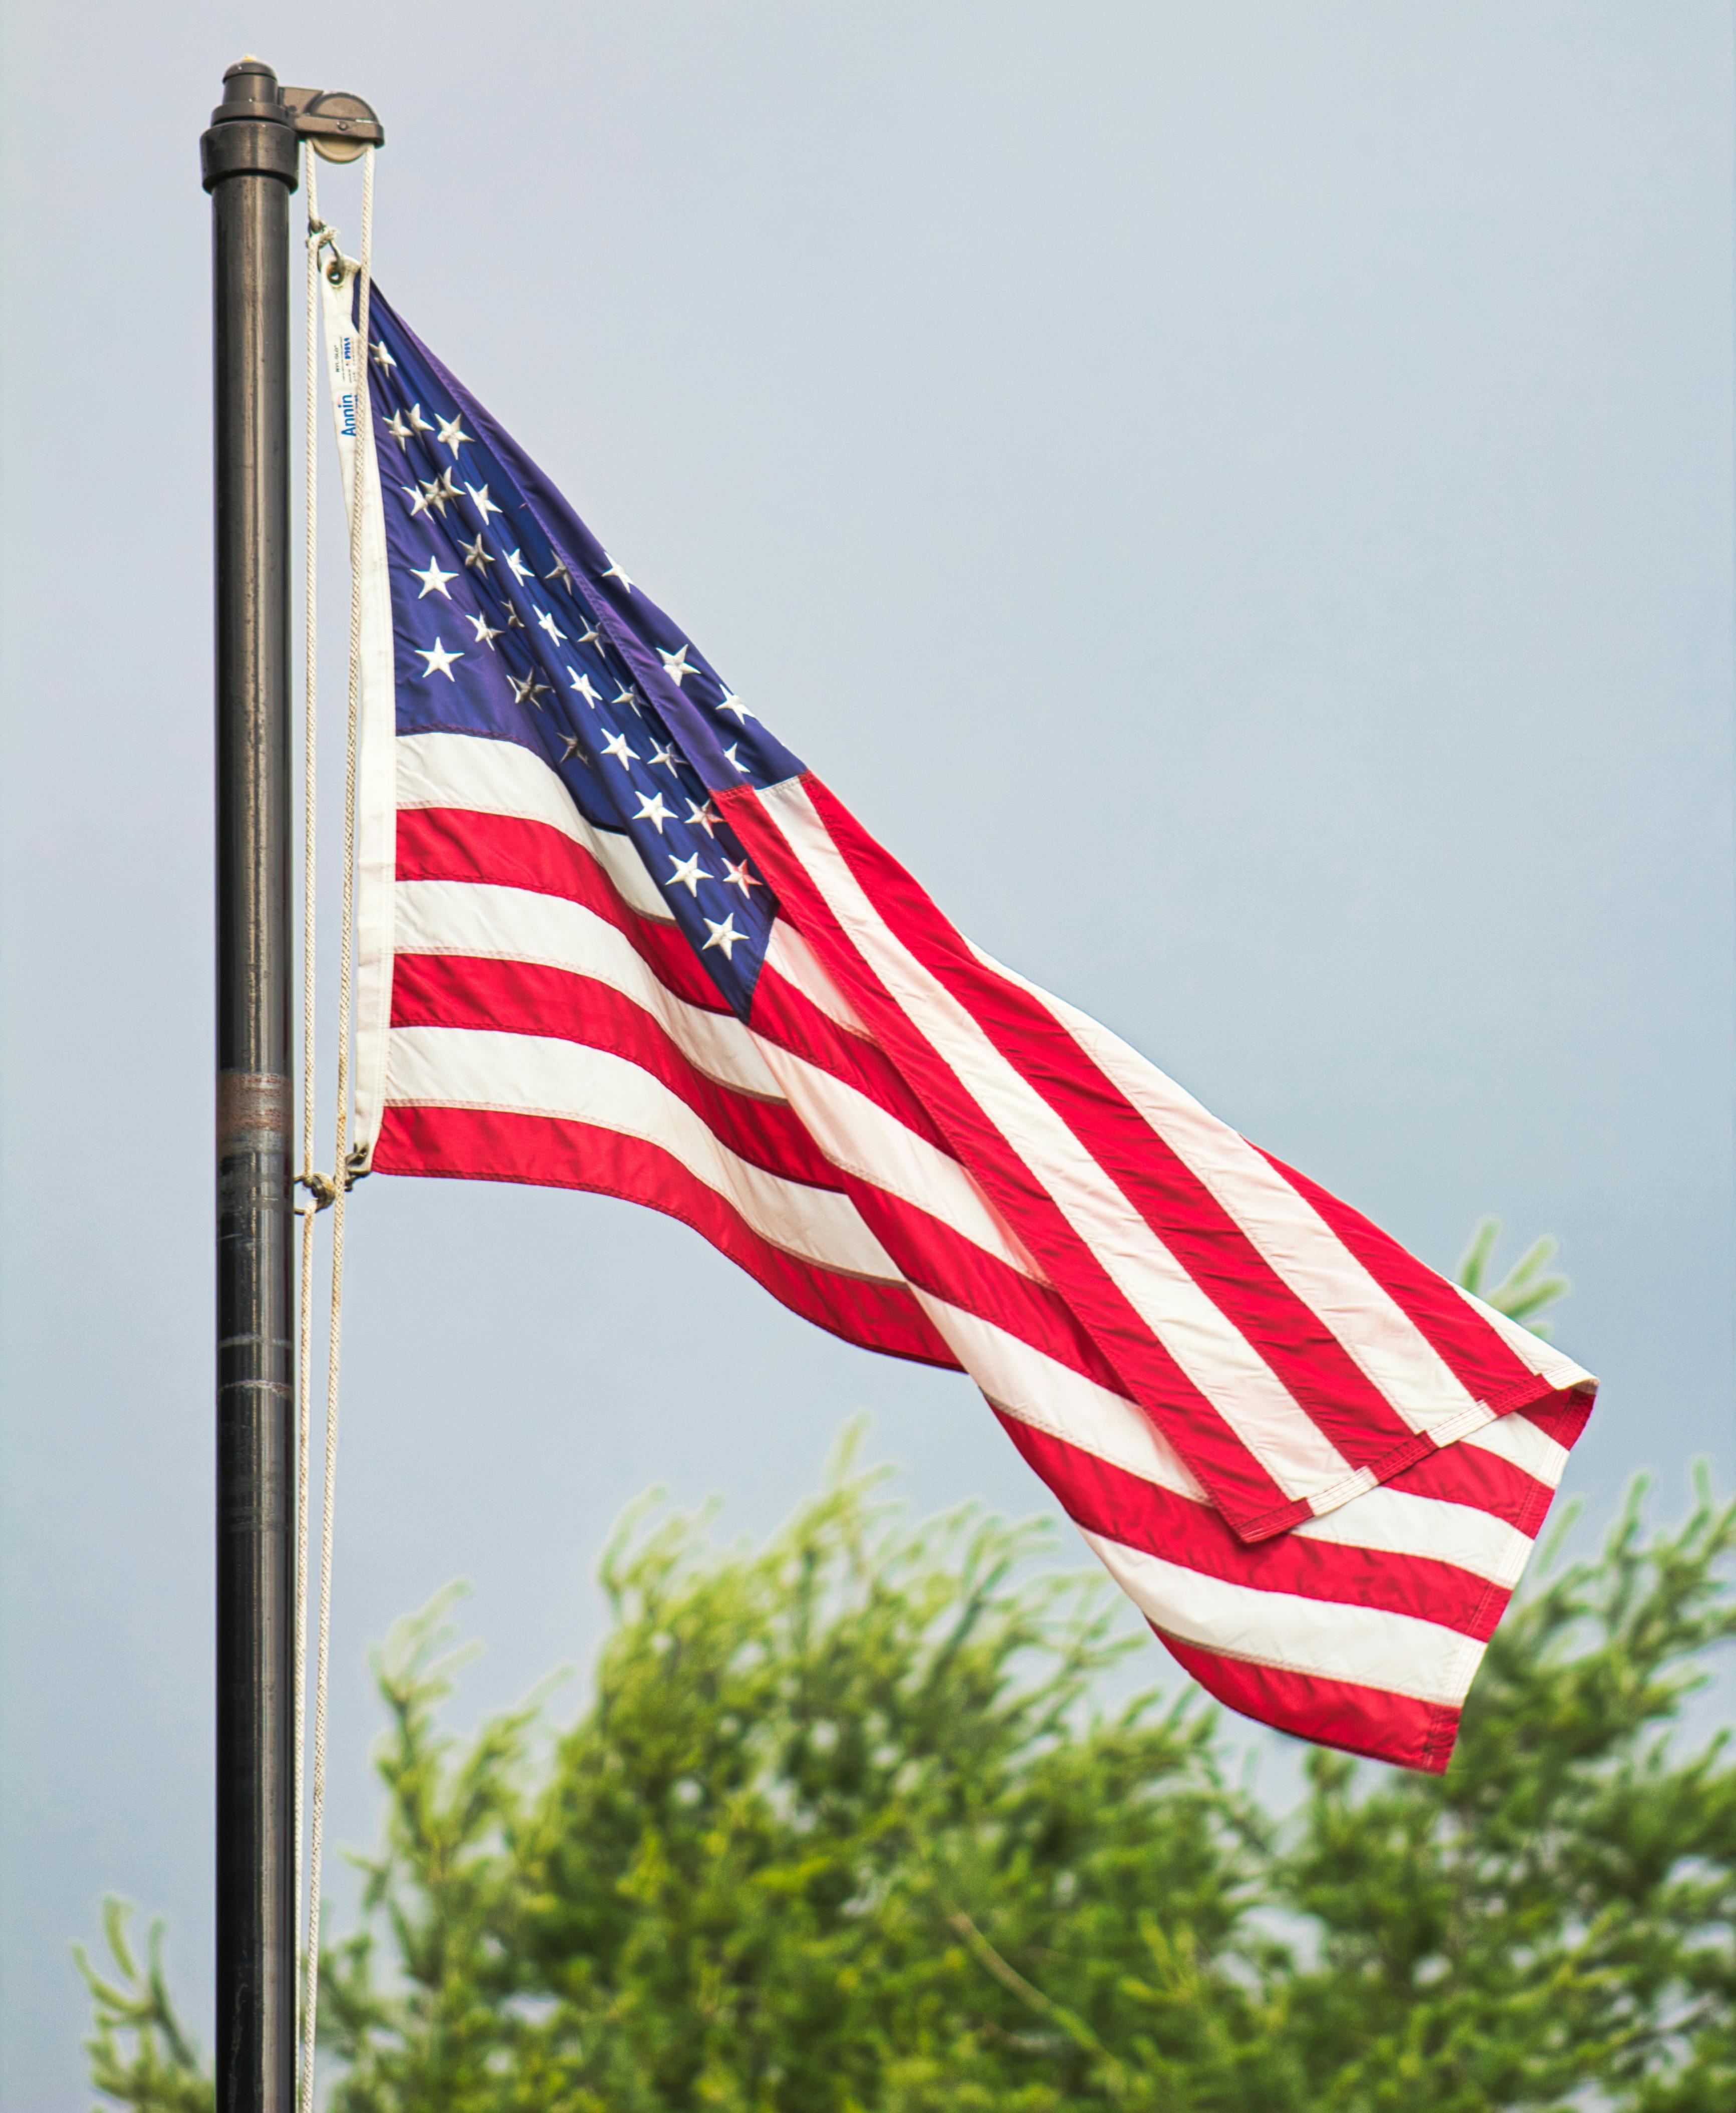 Free stock photo of American flag, flag pole